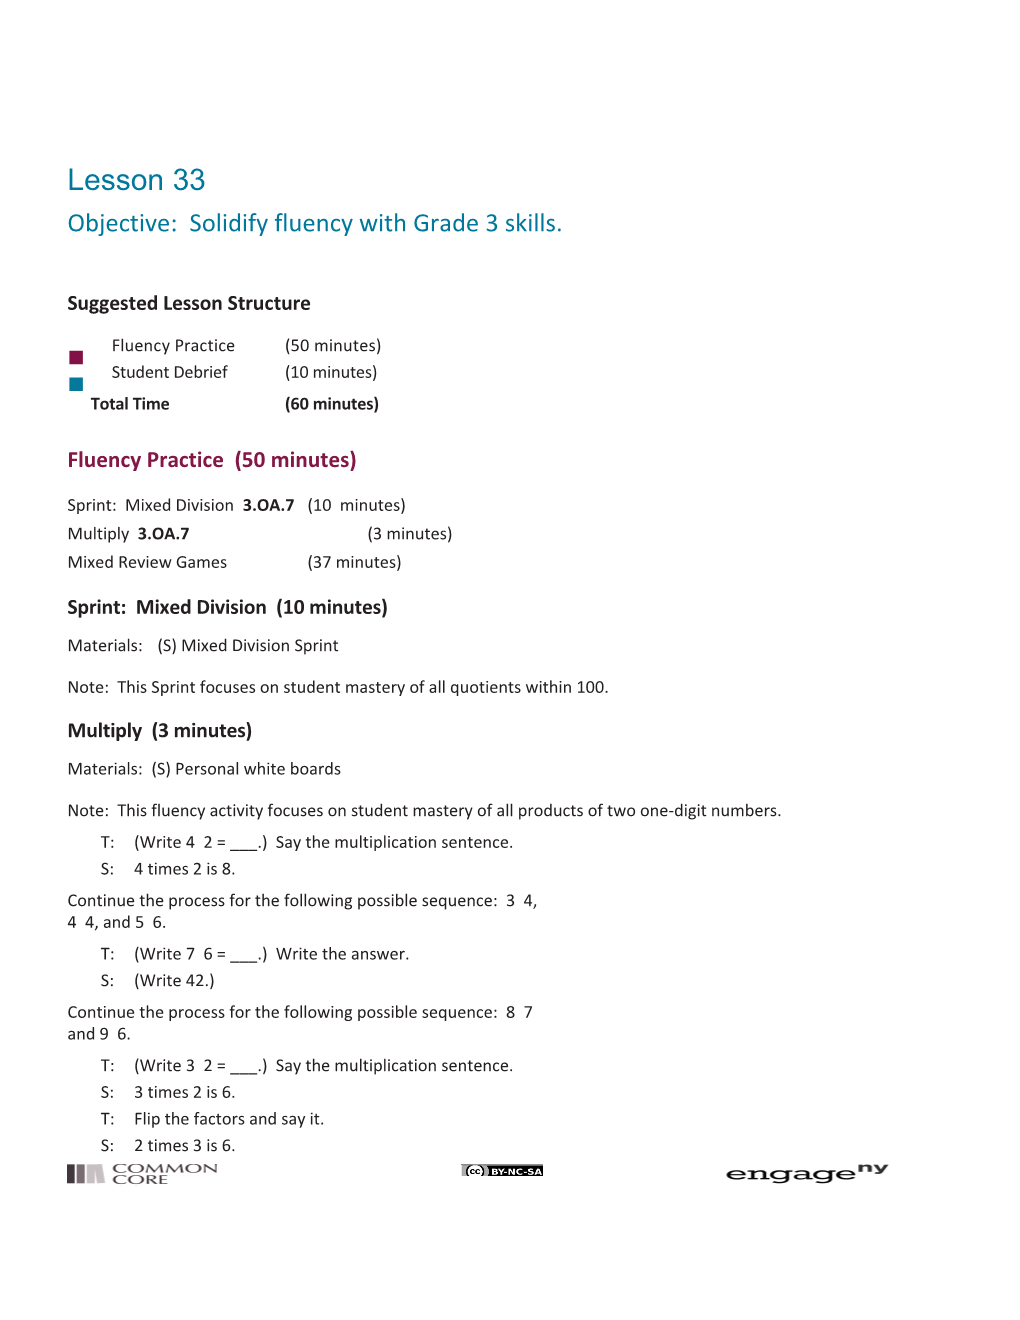 Objective: Solidify Fluency with Grade 3 Skills